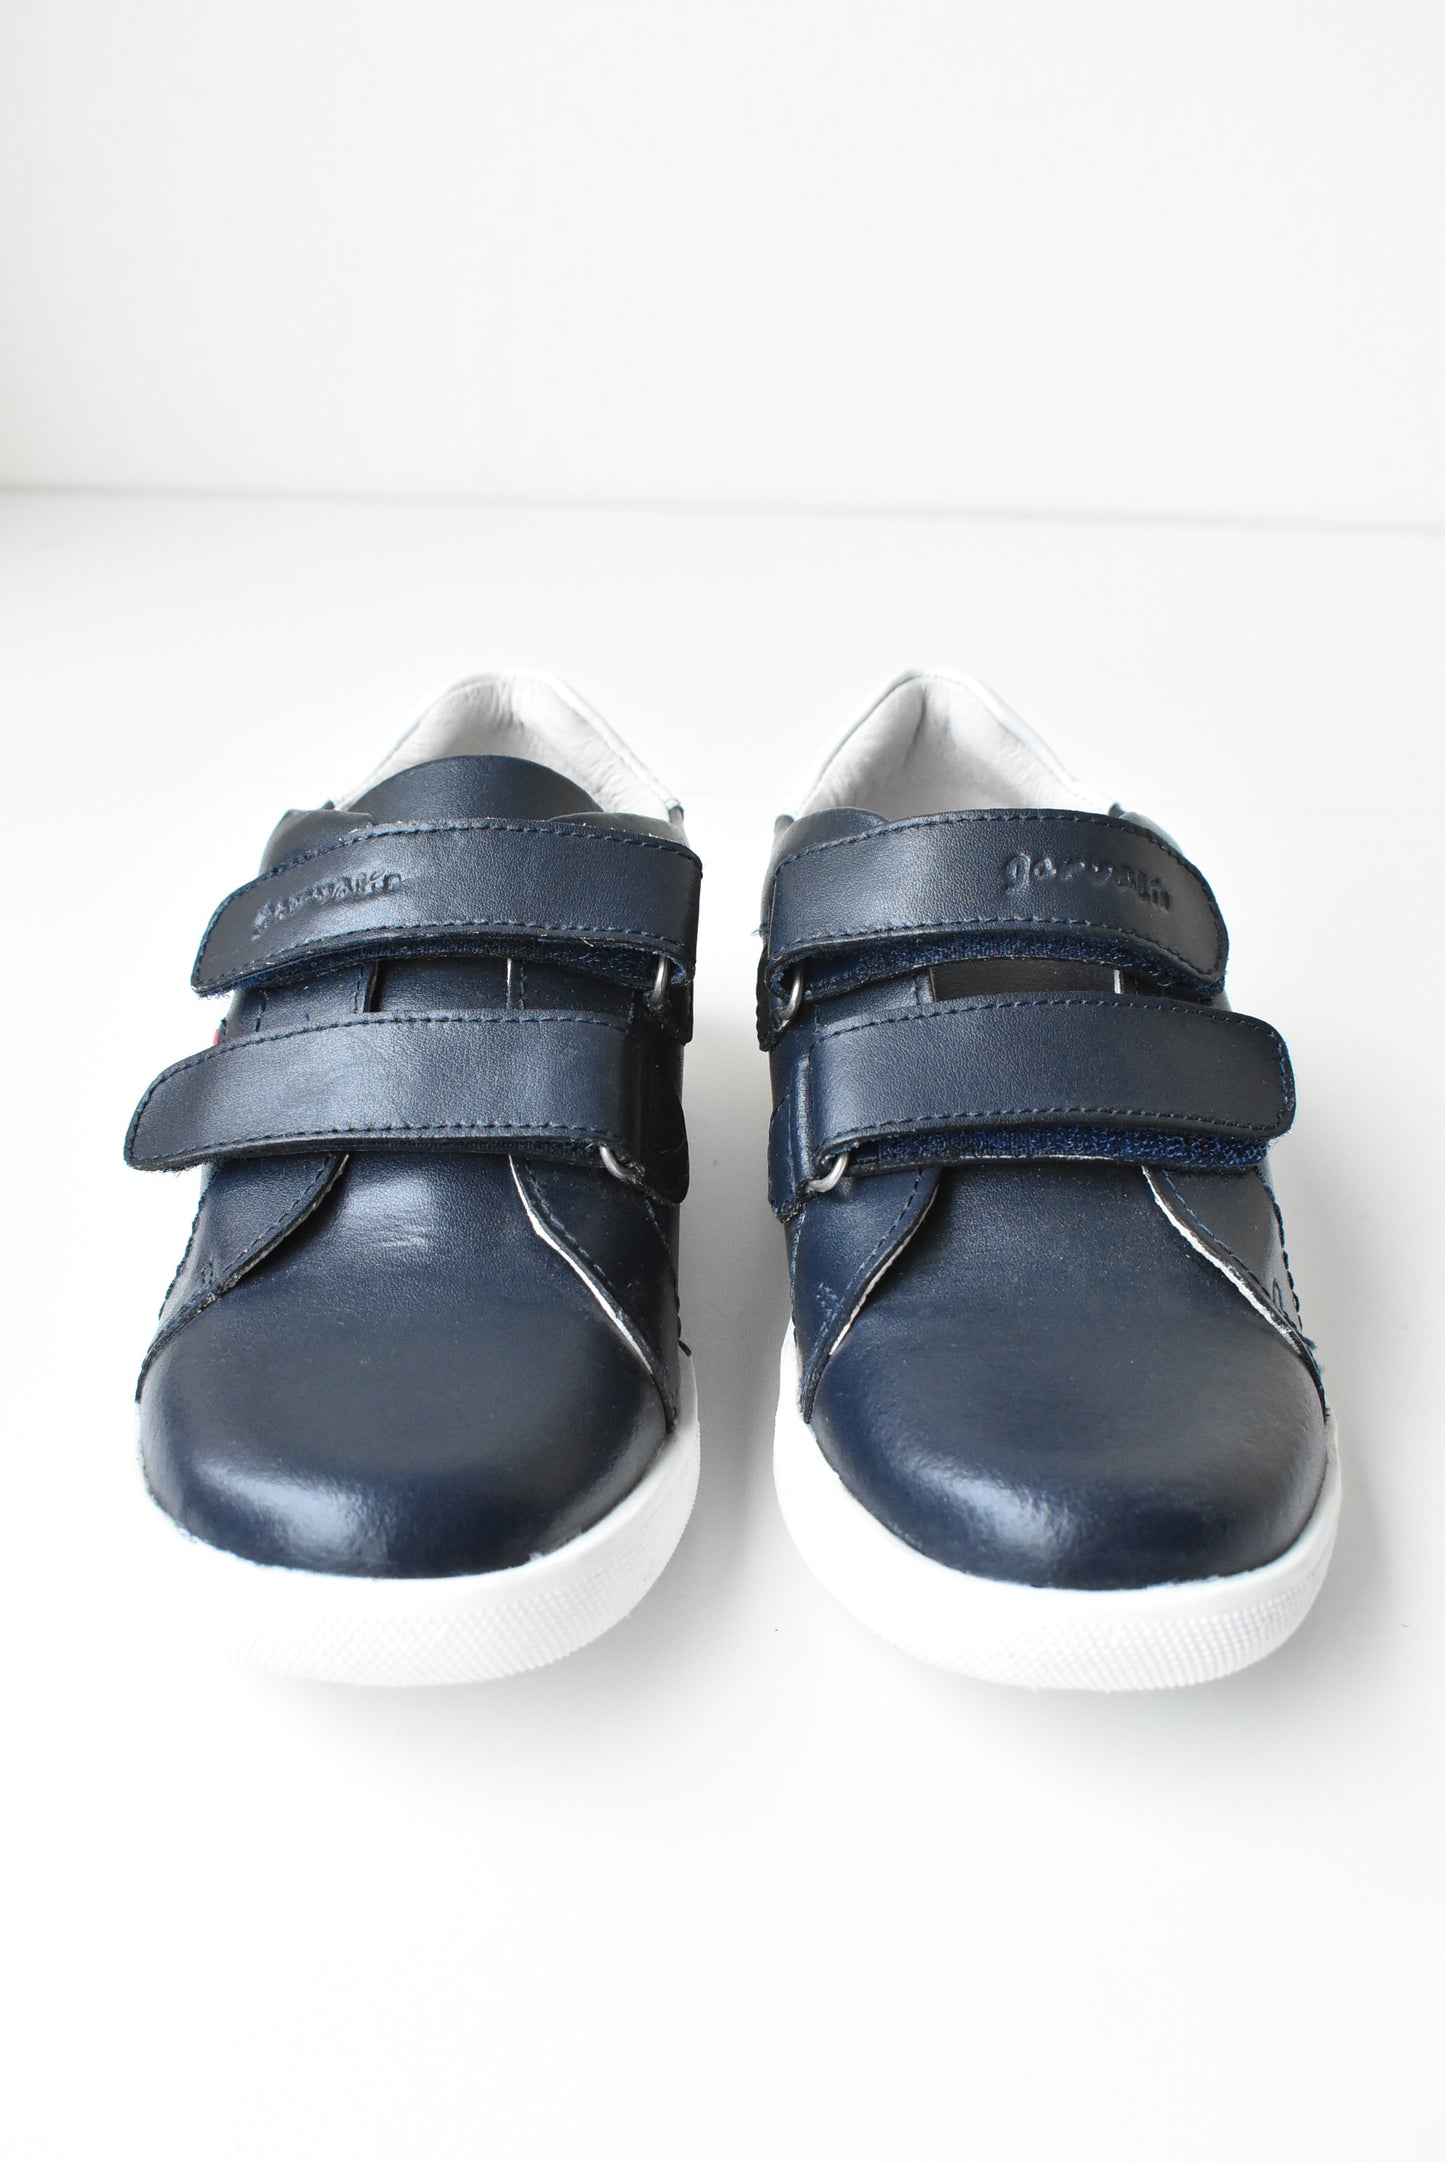 Garvalin navy leather velcro kids sneakers NEW, size 9